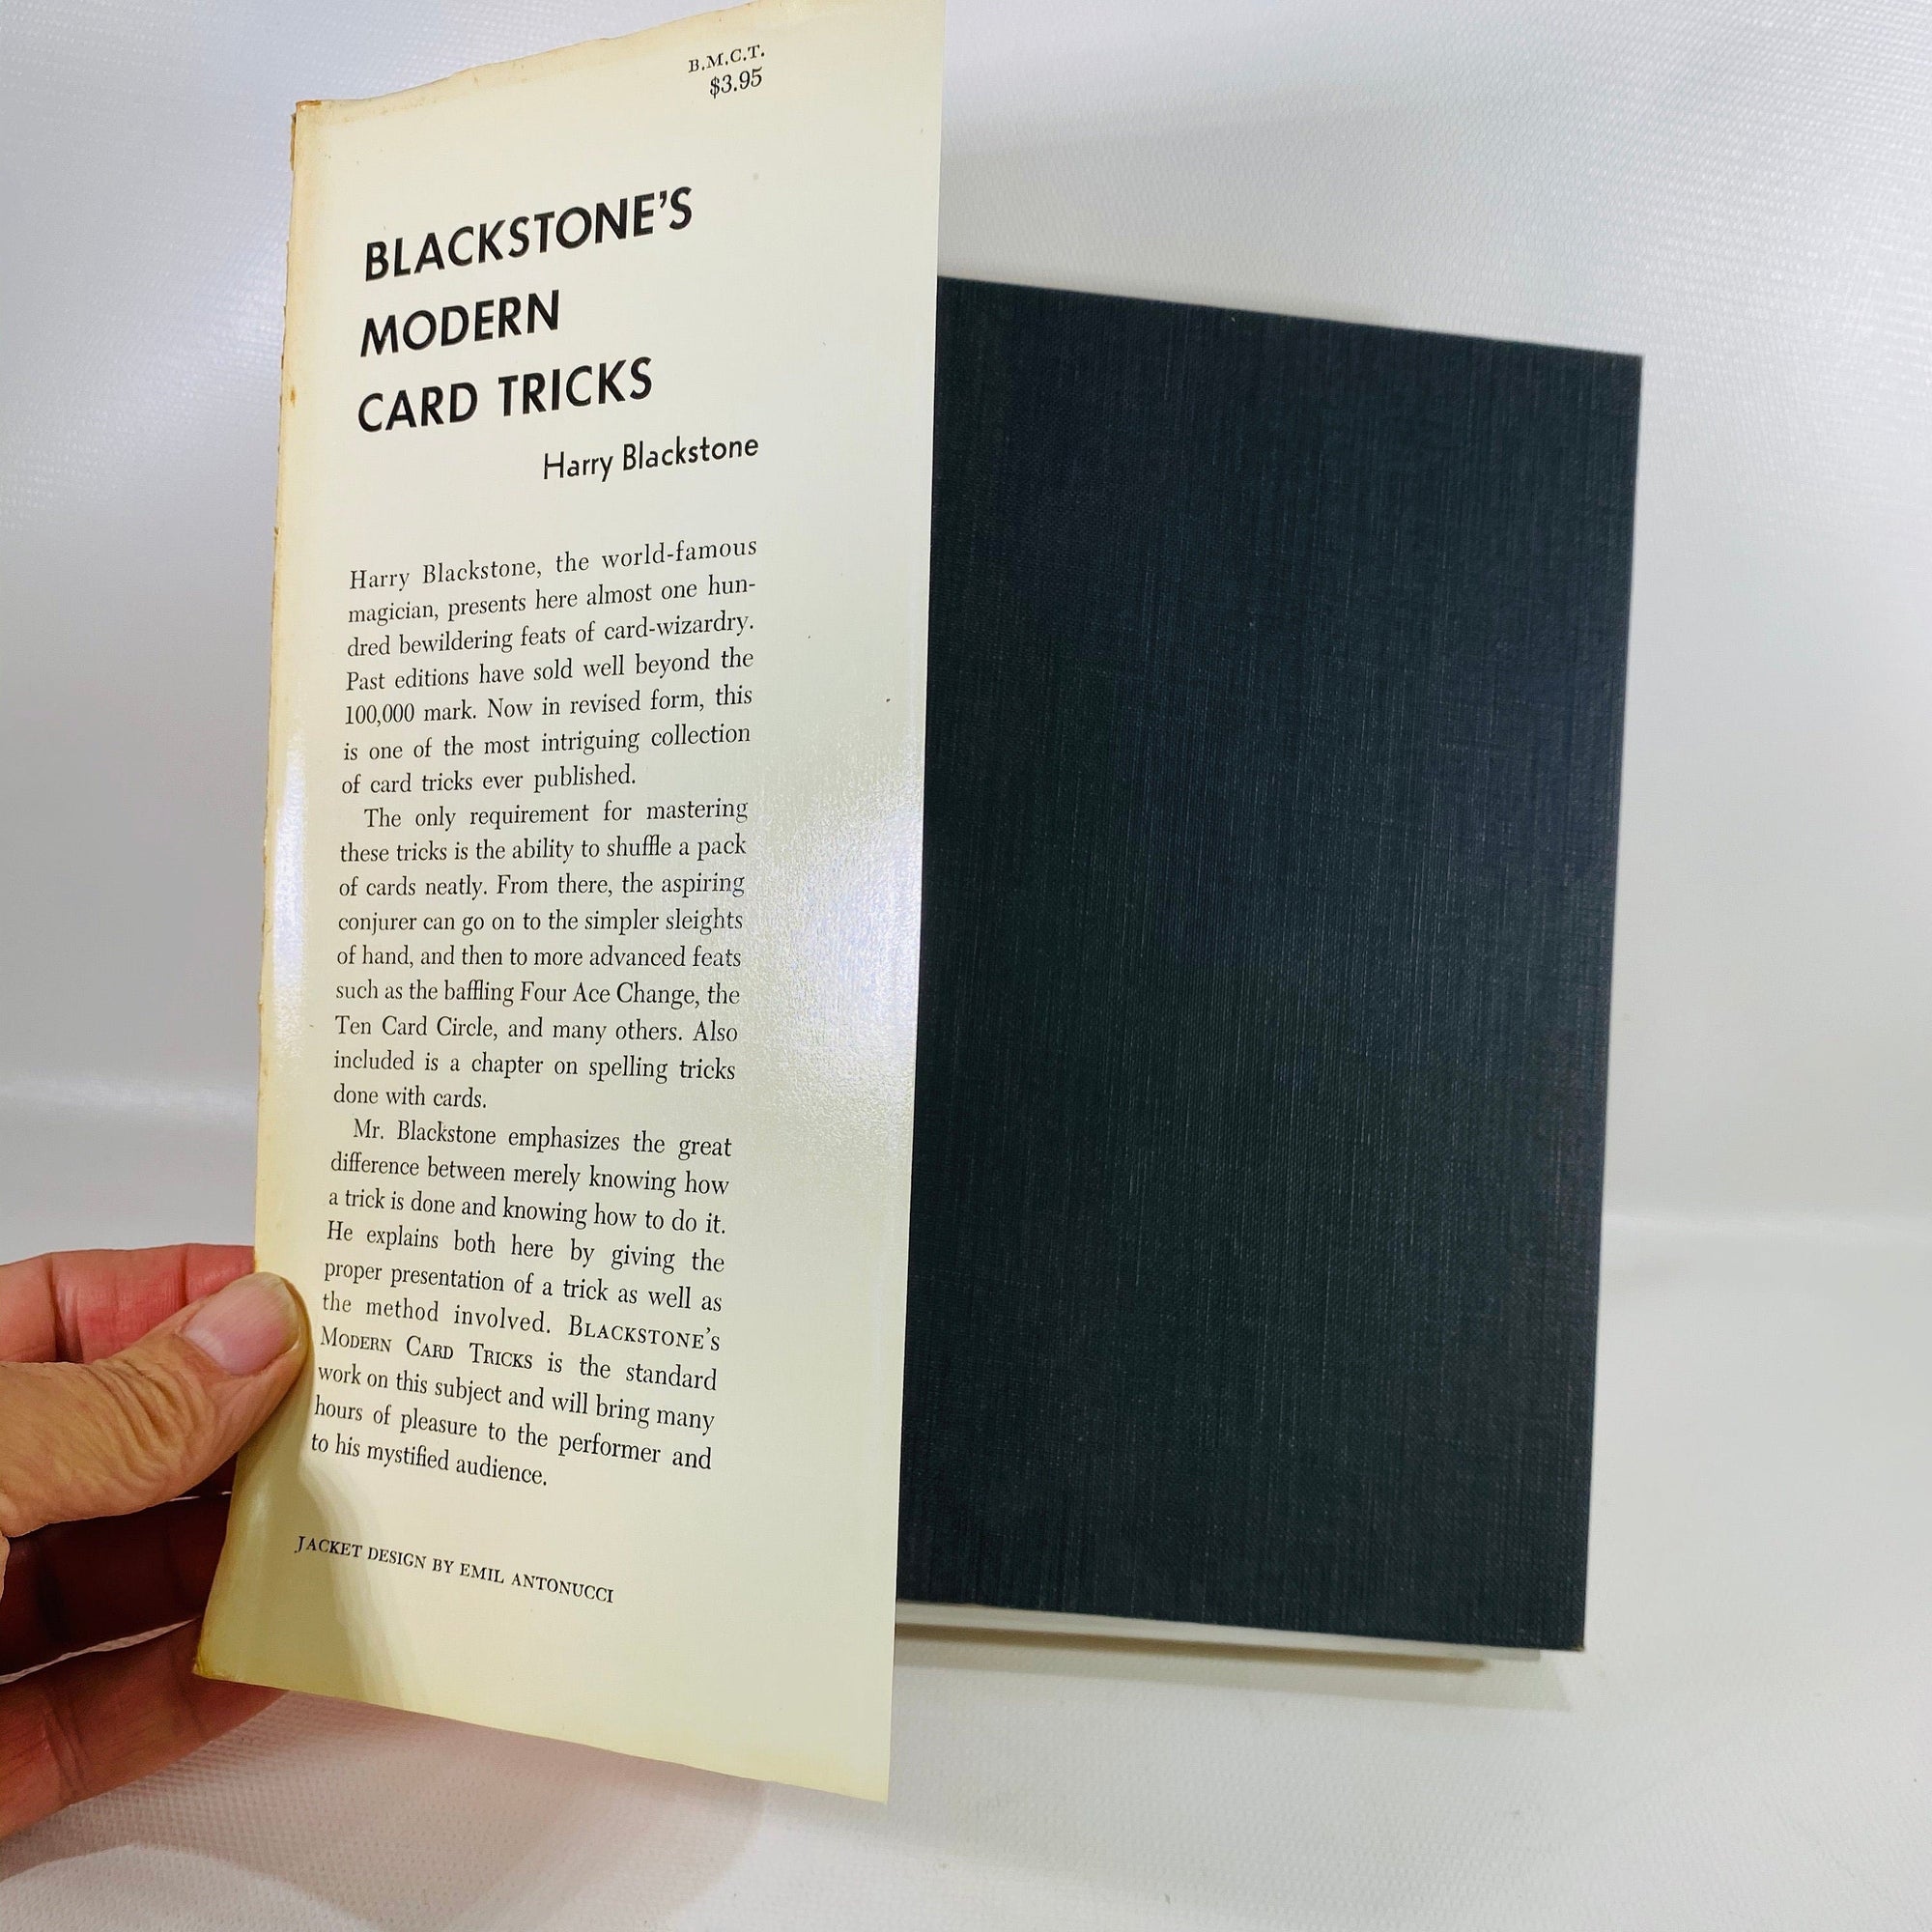 Blackstone's Modern Card Tricks by Harry Blackstone 1958